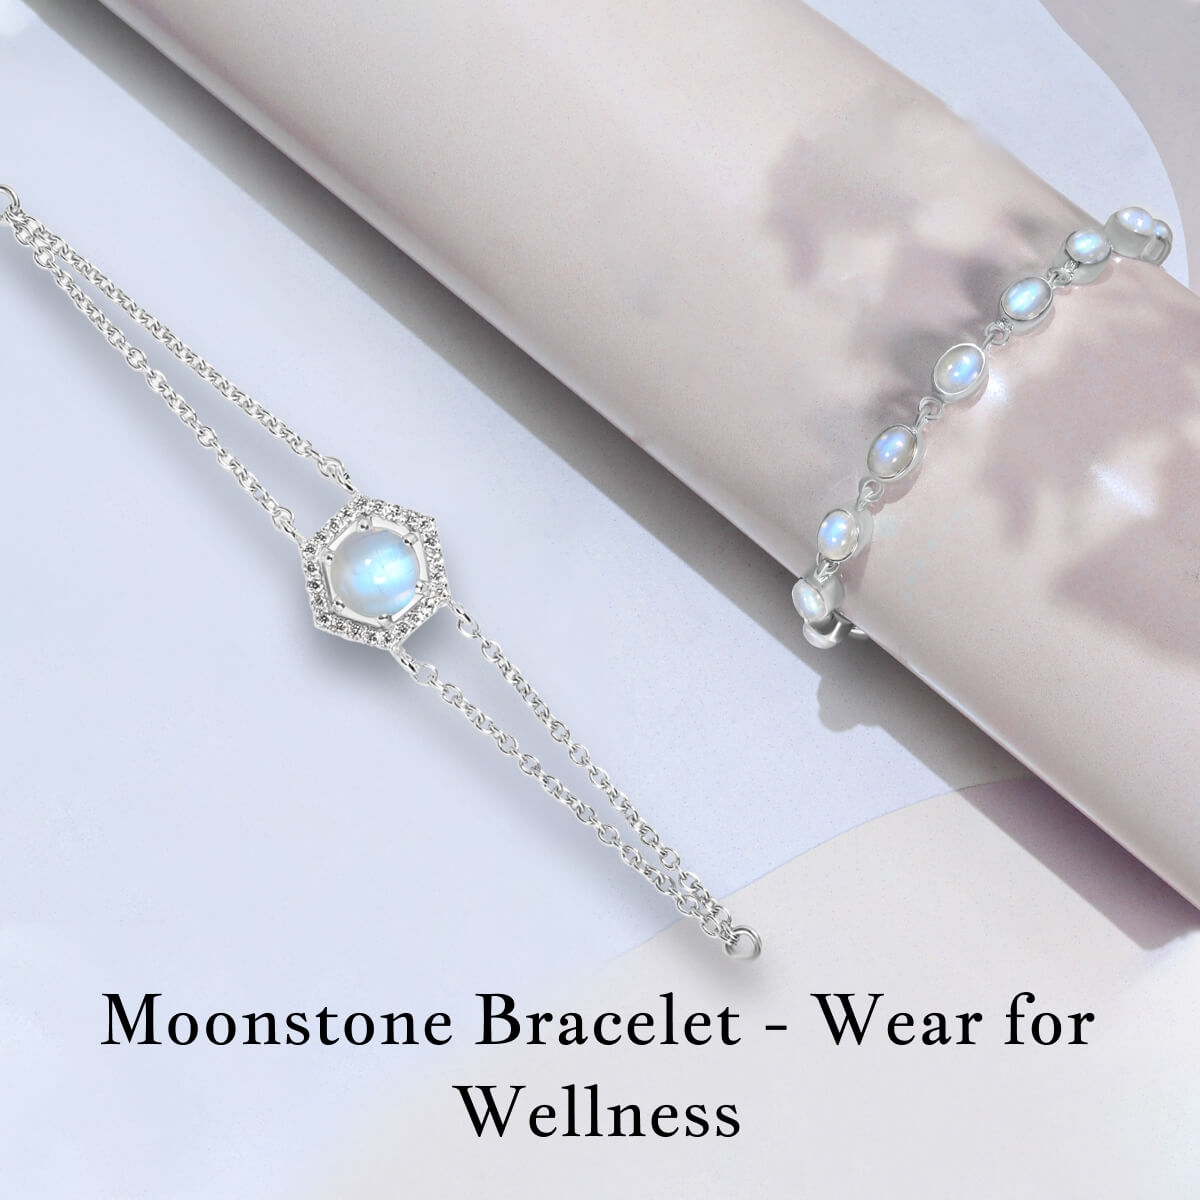 Benefits of wearing Moonstone bracelet